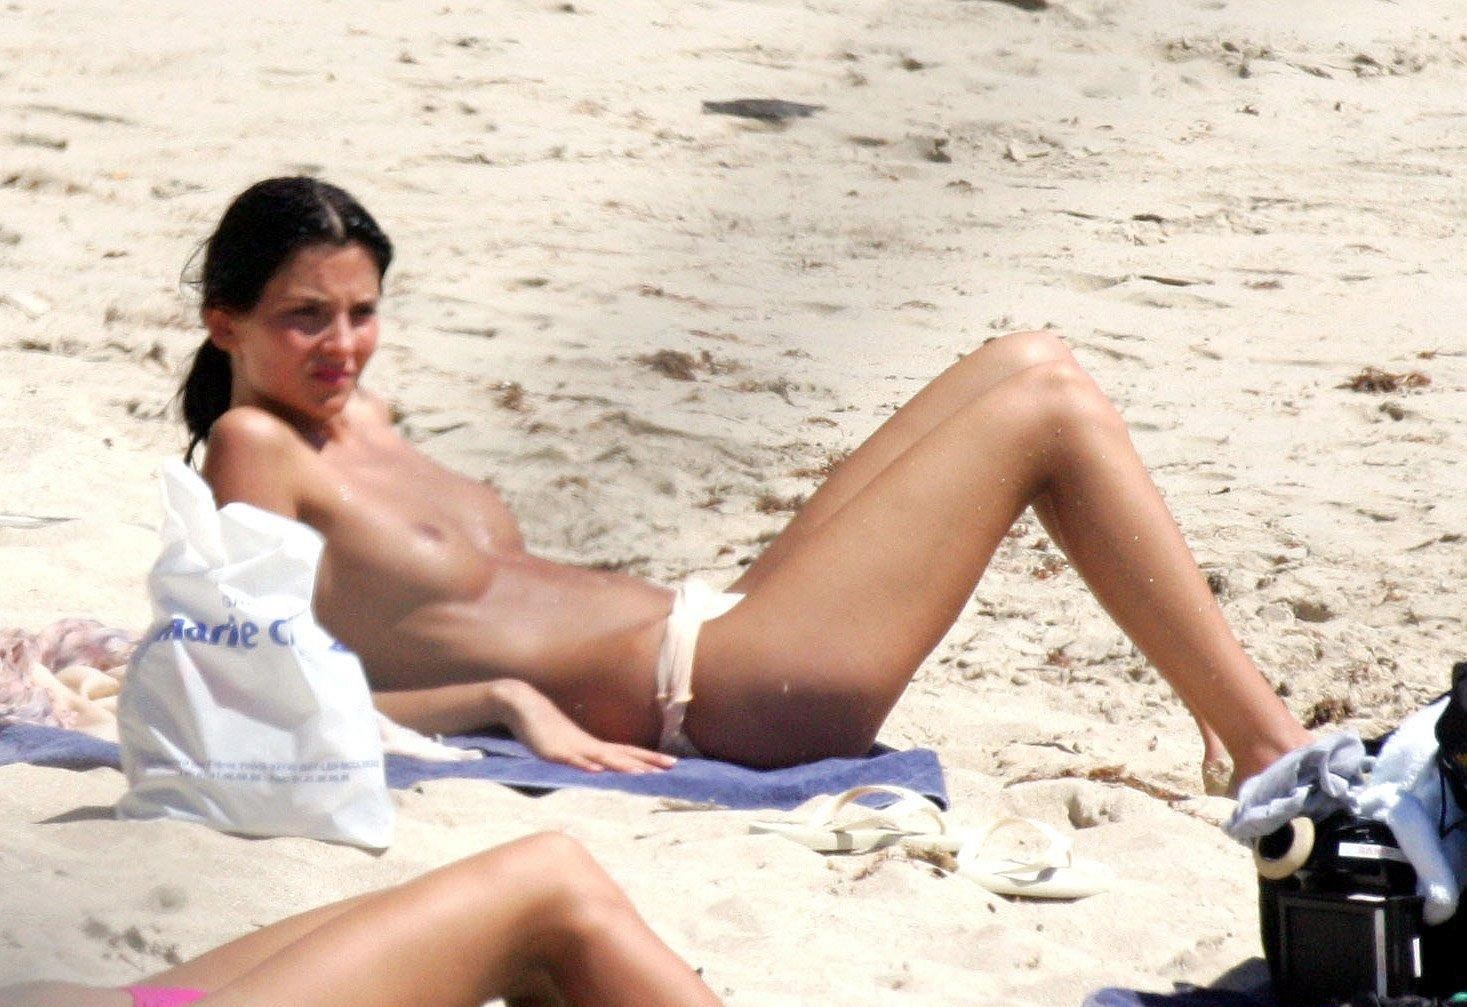 Candid beach teens topless enjoying the sun topless sunbathing #67257004